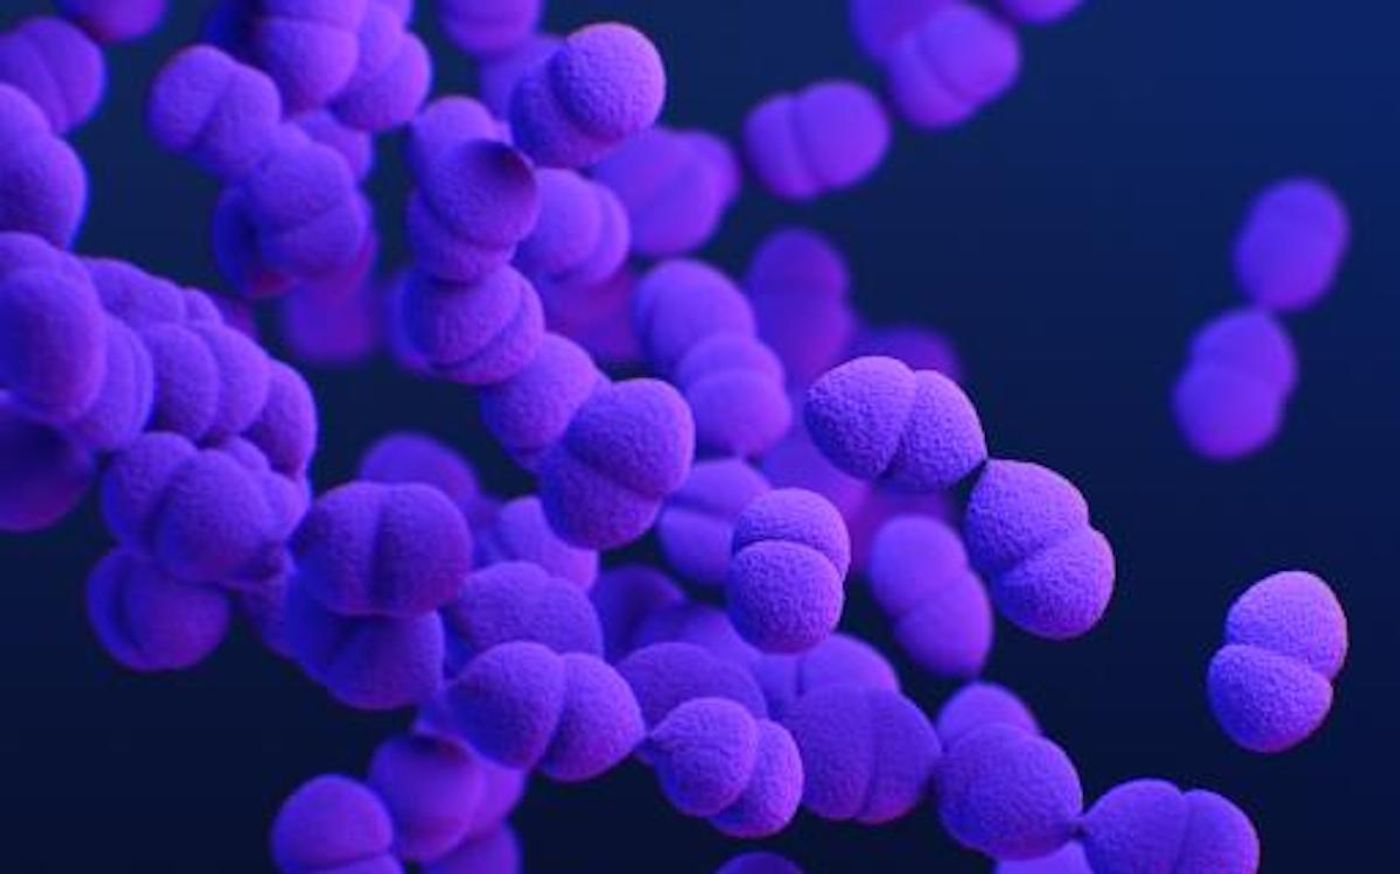 A medical illustration of drug-resistant, Streptococcus pneumoniae bacteria / Credit: CDC / Medical Illustrator: Meredith Newlove